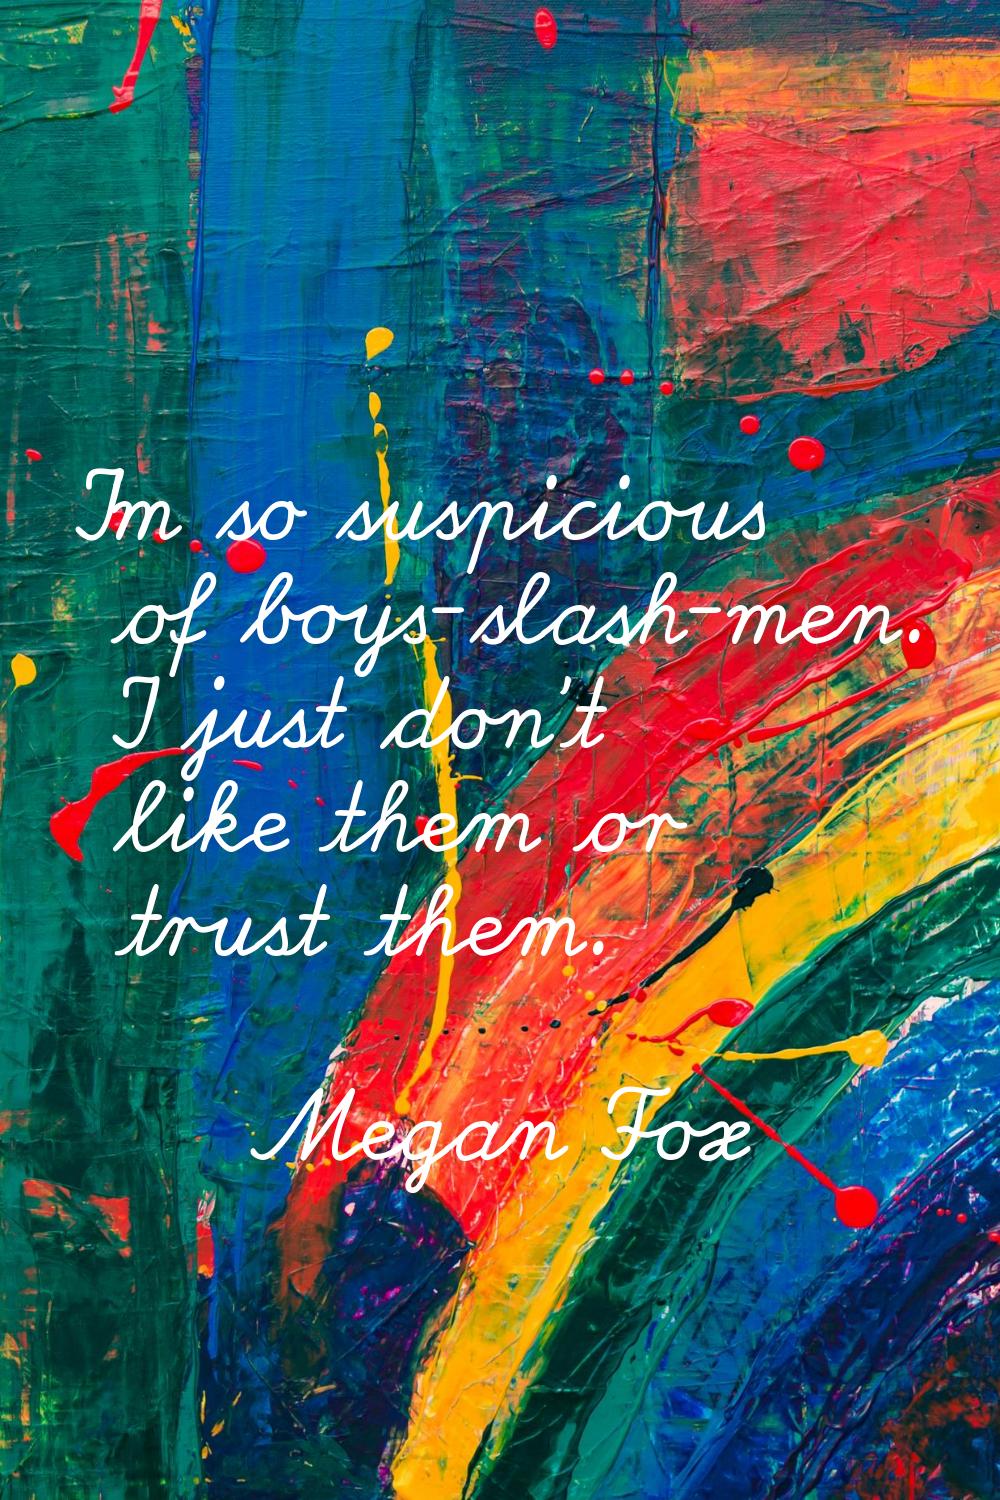 I'm so suspicious of boys-slash-men. I just don't like them or trust them.